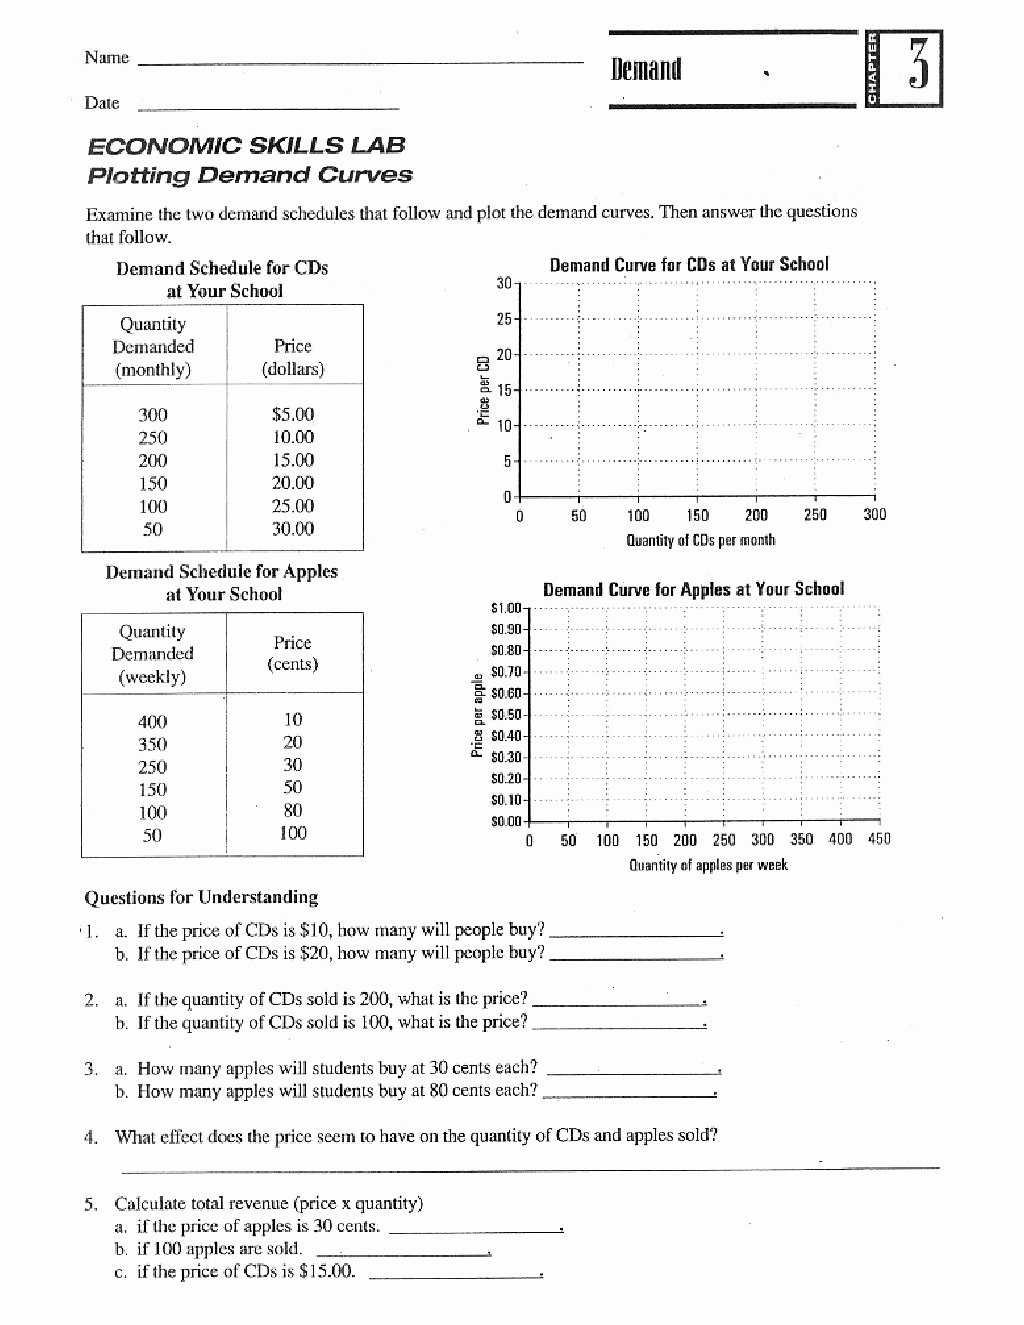 Supply and Demand Worksheet Fresh Demand Curve Practice Worksheet by Lina Trullinger Via